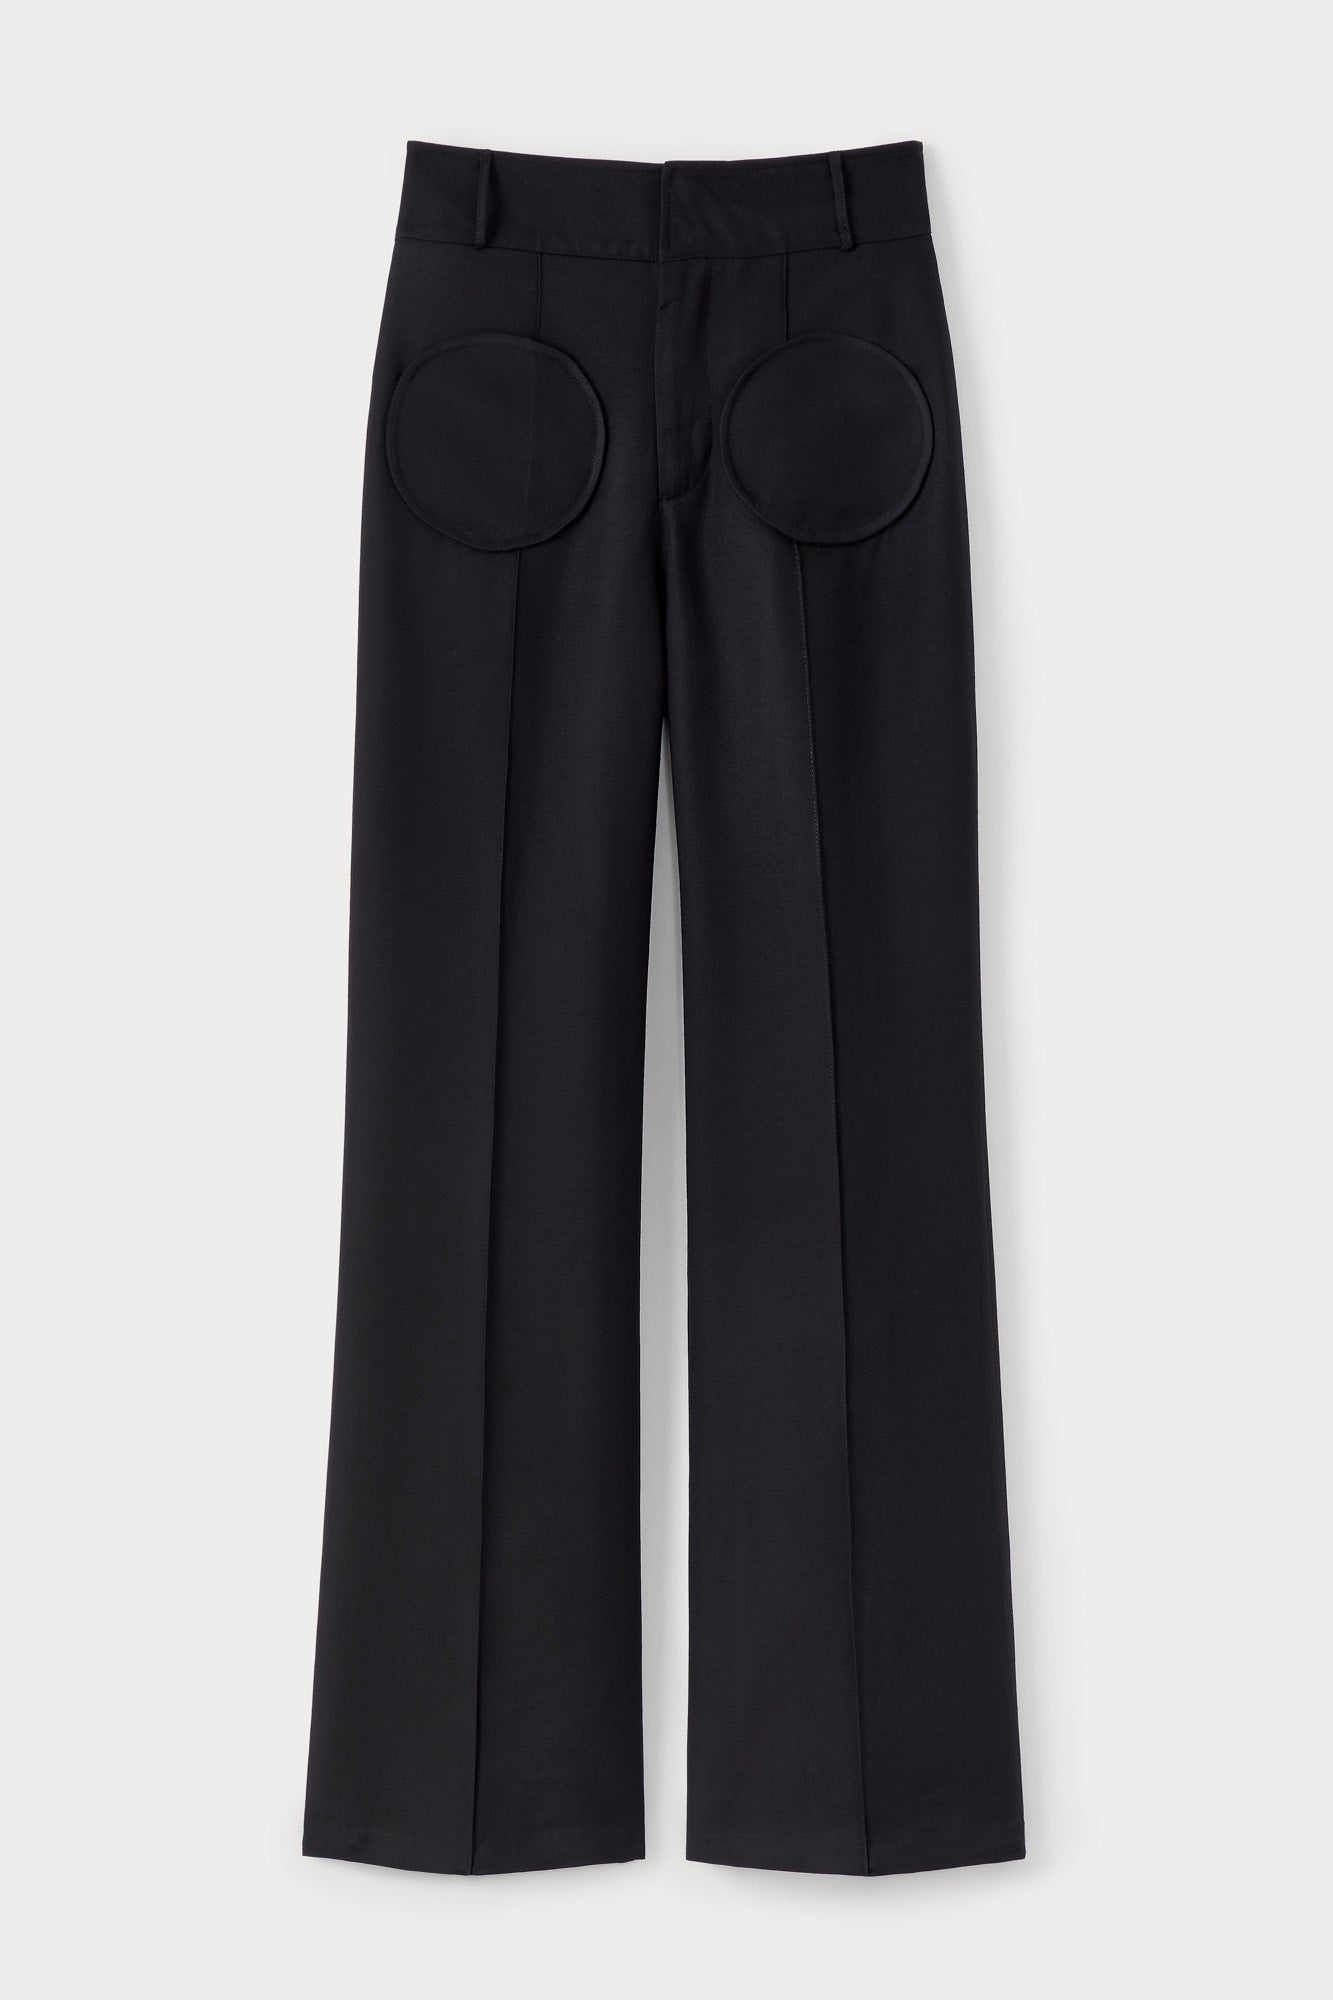 Black Flared Pants with Circular Pocket Detail